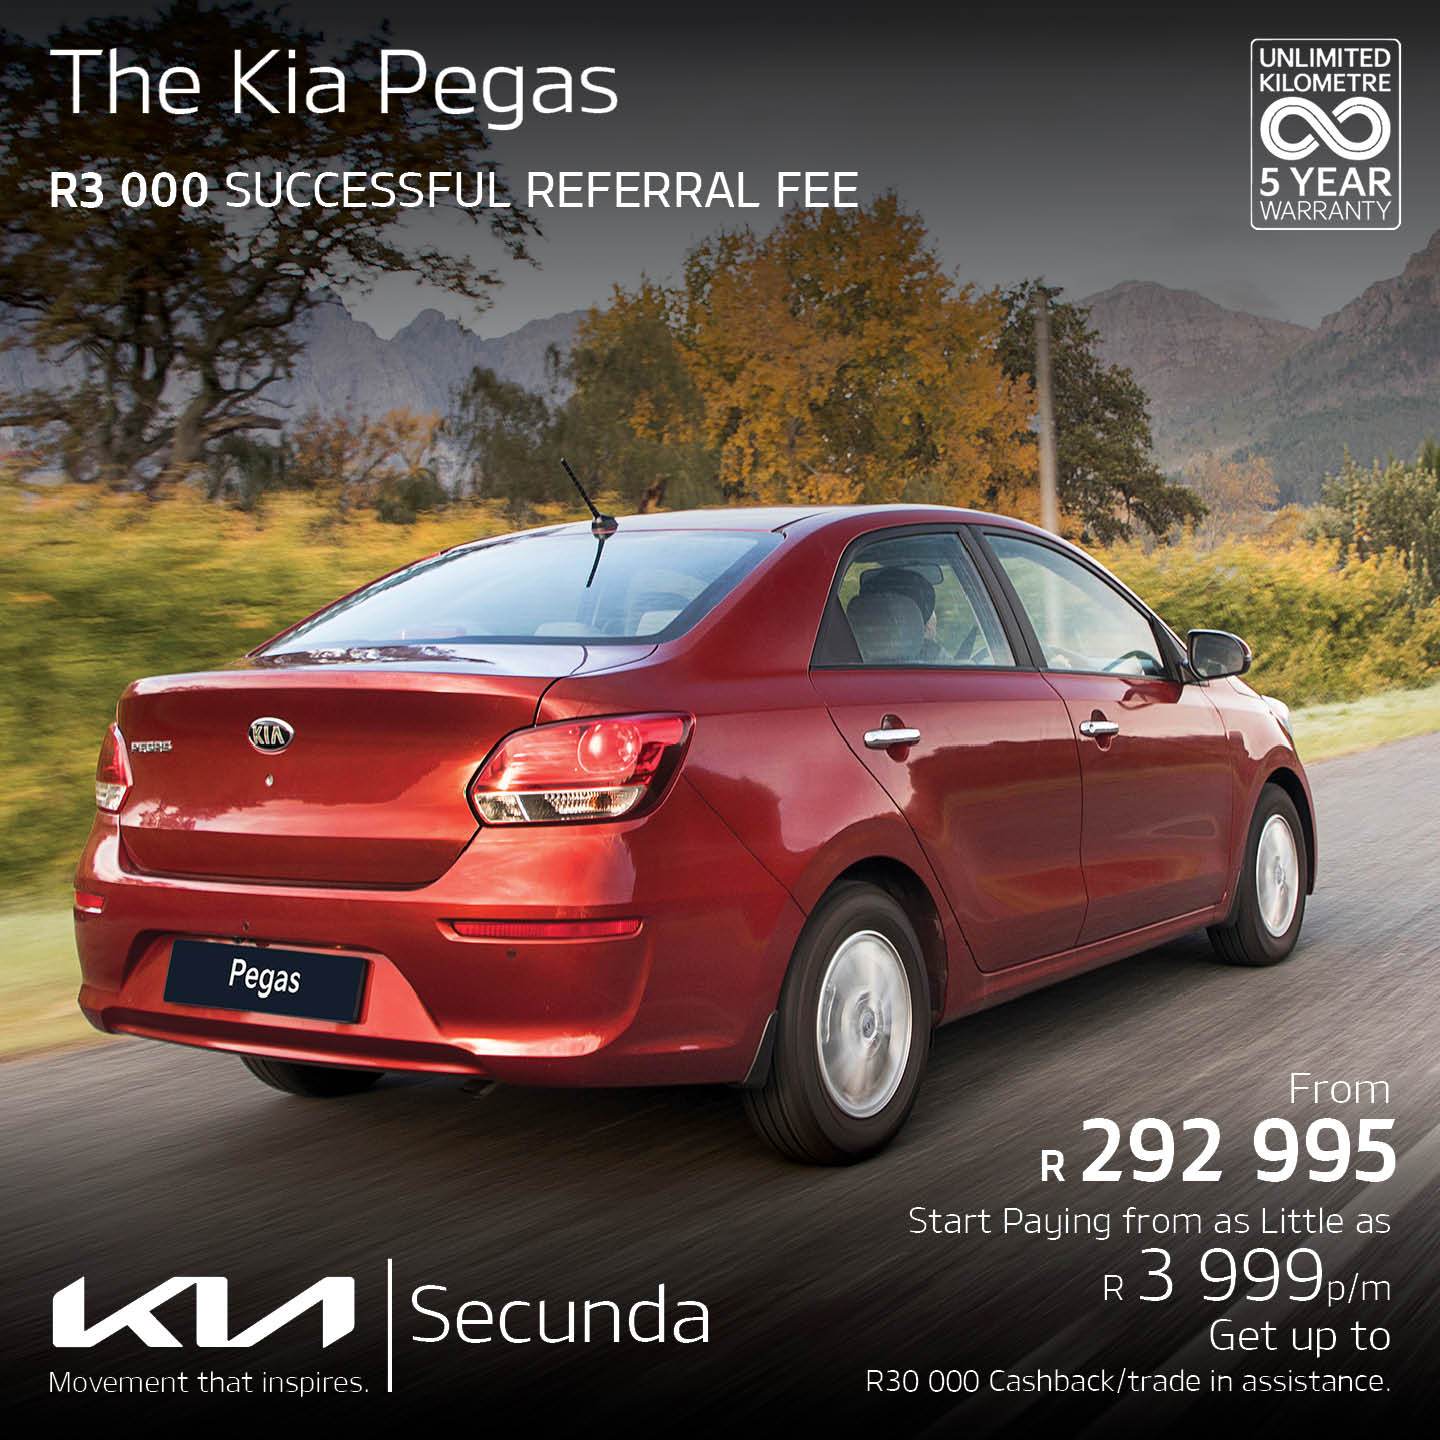 The KIA Pegas image from Eastvaal Motors